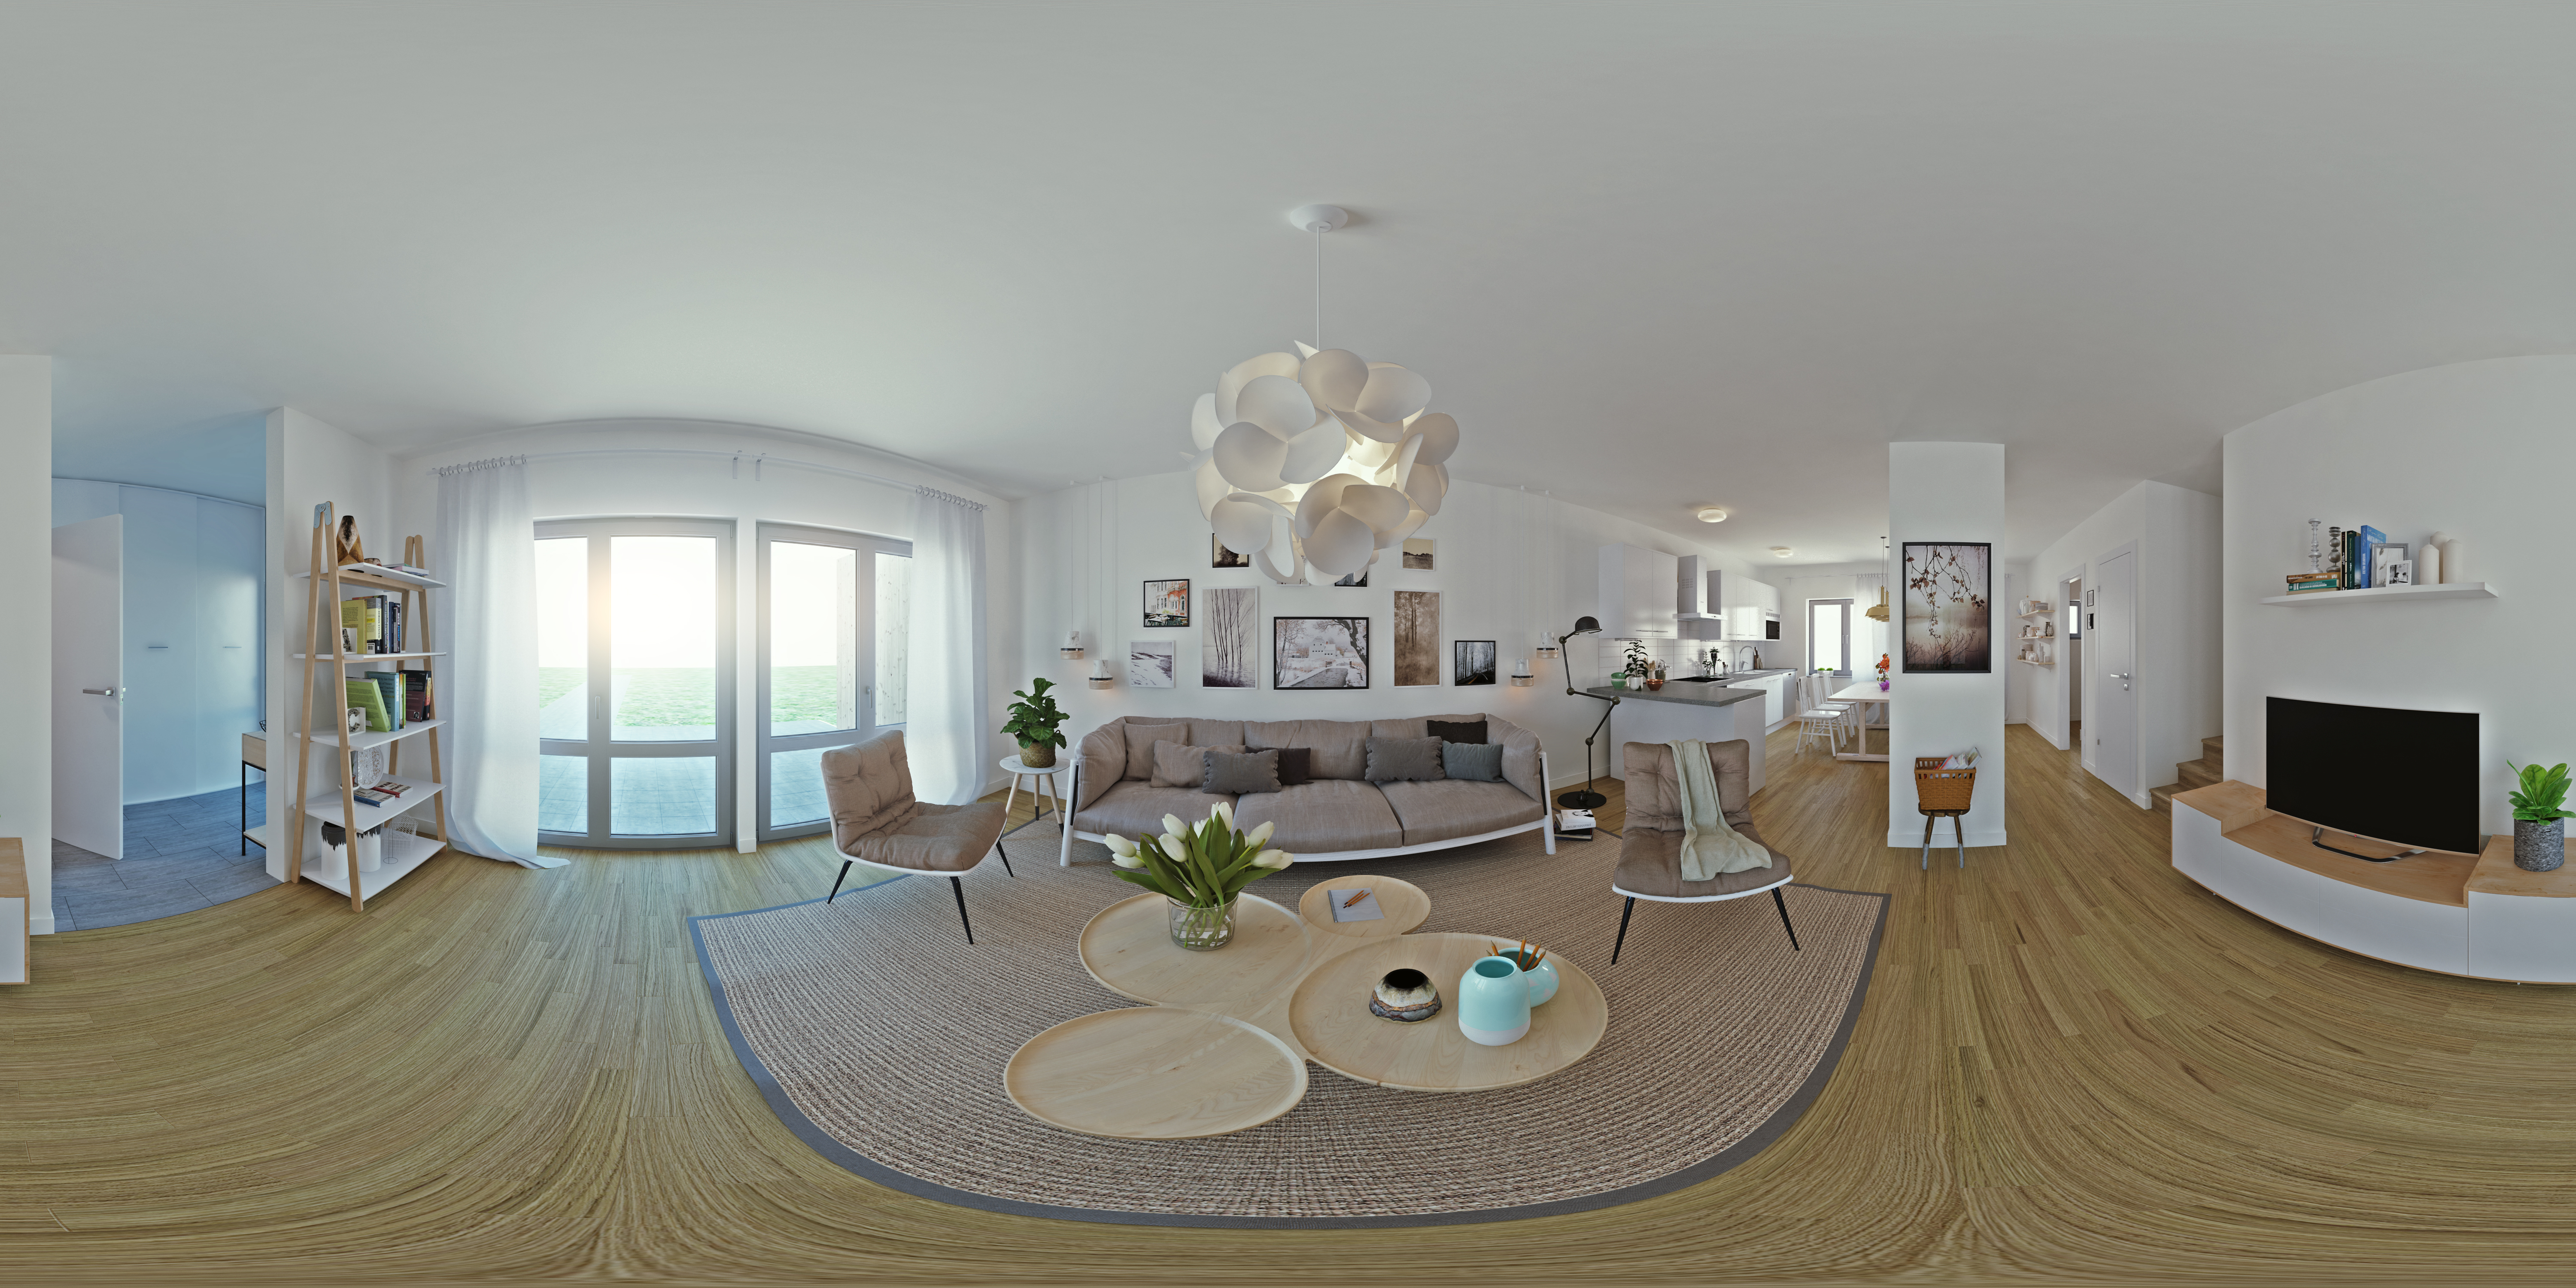 Panoramic Possibilities: Maximizing Views In Room Design